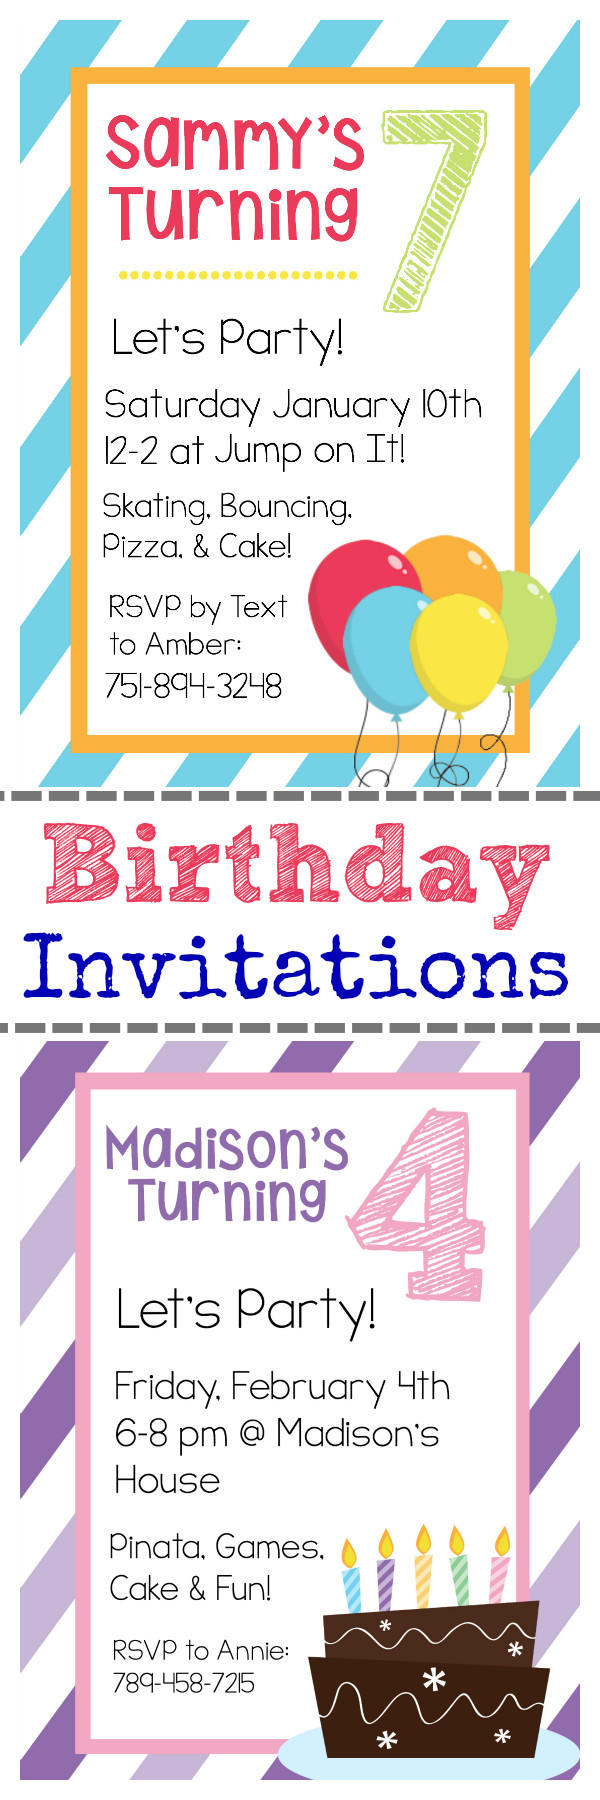 Free Templates For Birthday Invitations
 Free Printable Birthday Invitation Templates